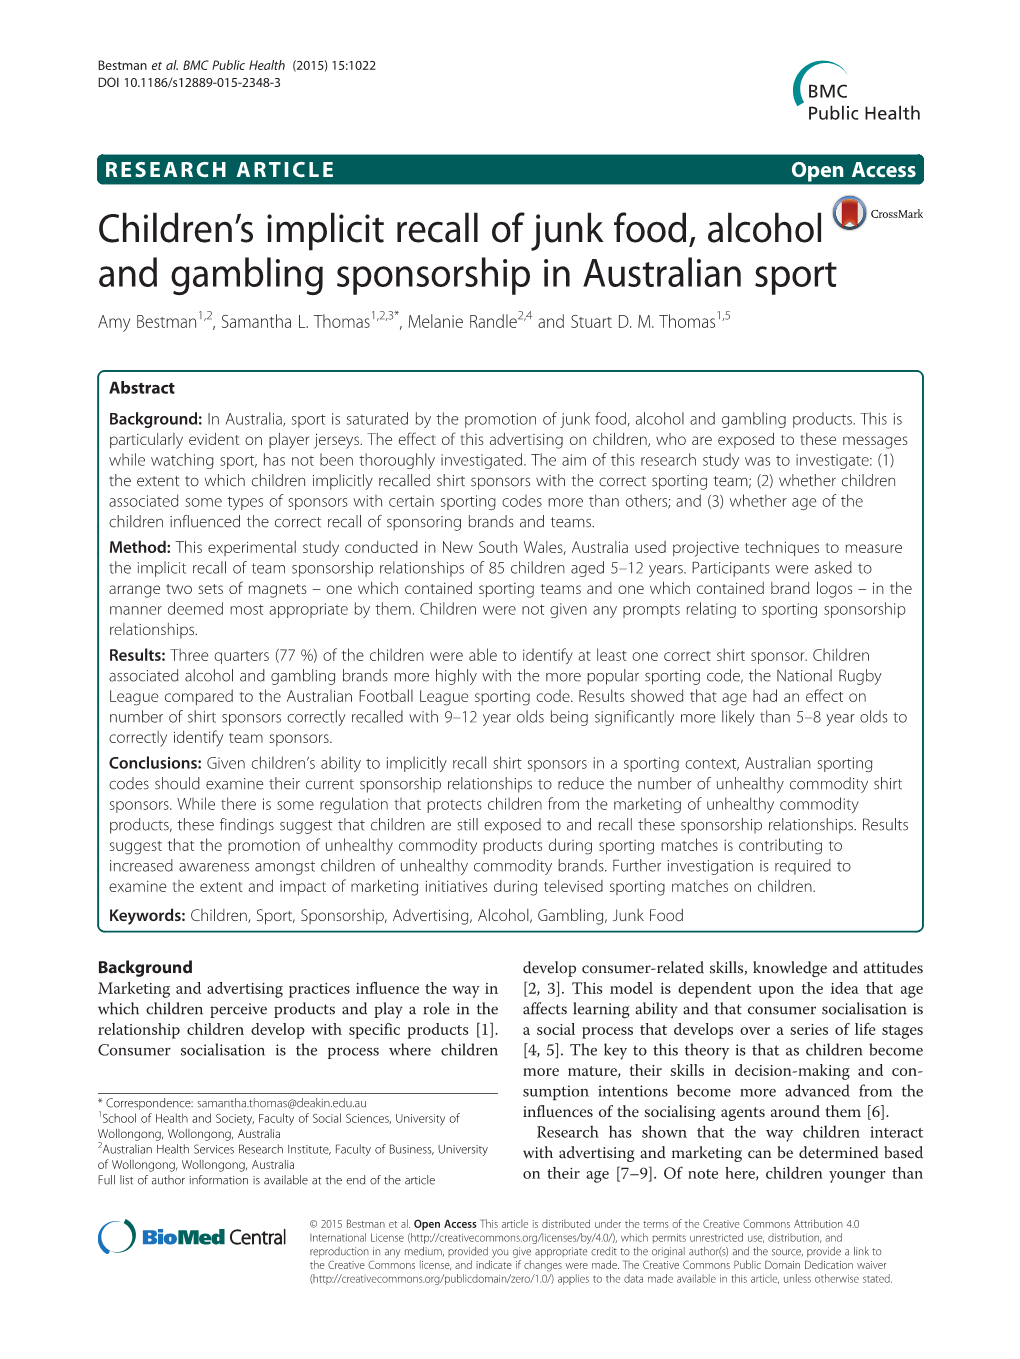 Children's Implicit Recall of Junk Food, Alcohol and Gambling Sponsorship in Australian Sport